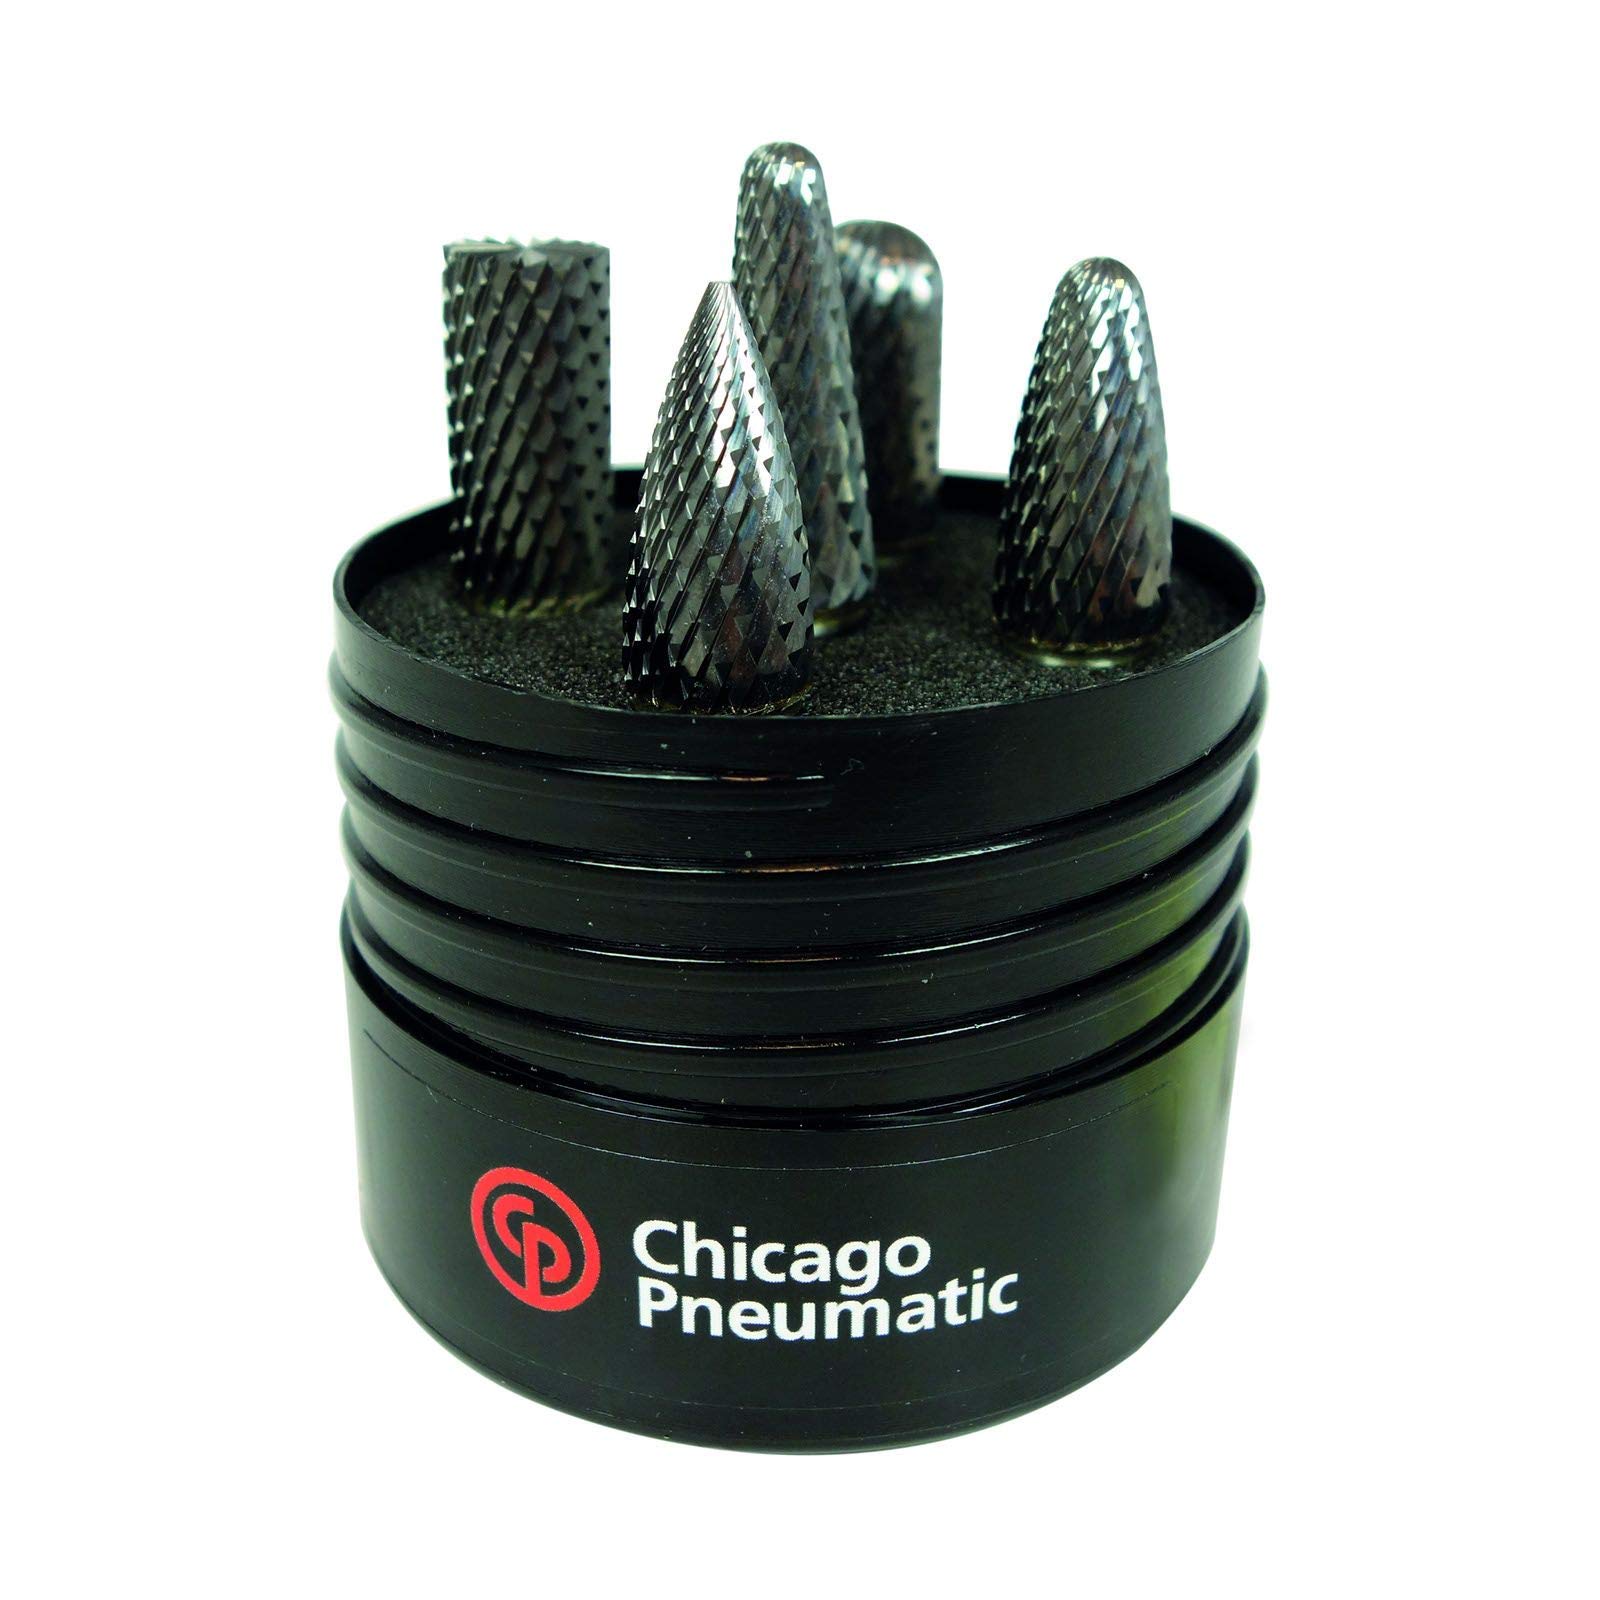 Chicago Pneumatic Fräser Set Power Cut 6 mm 5 Stück von Chicago Pneumatic